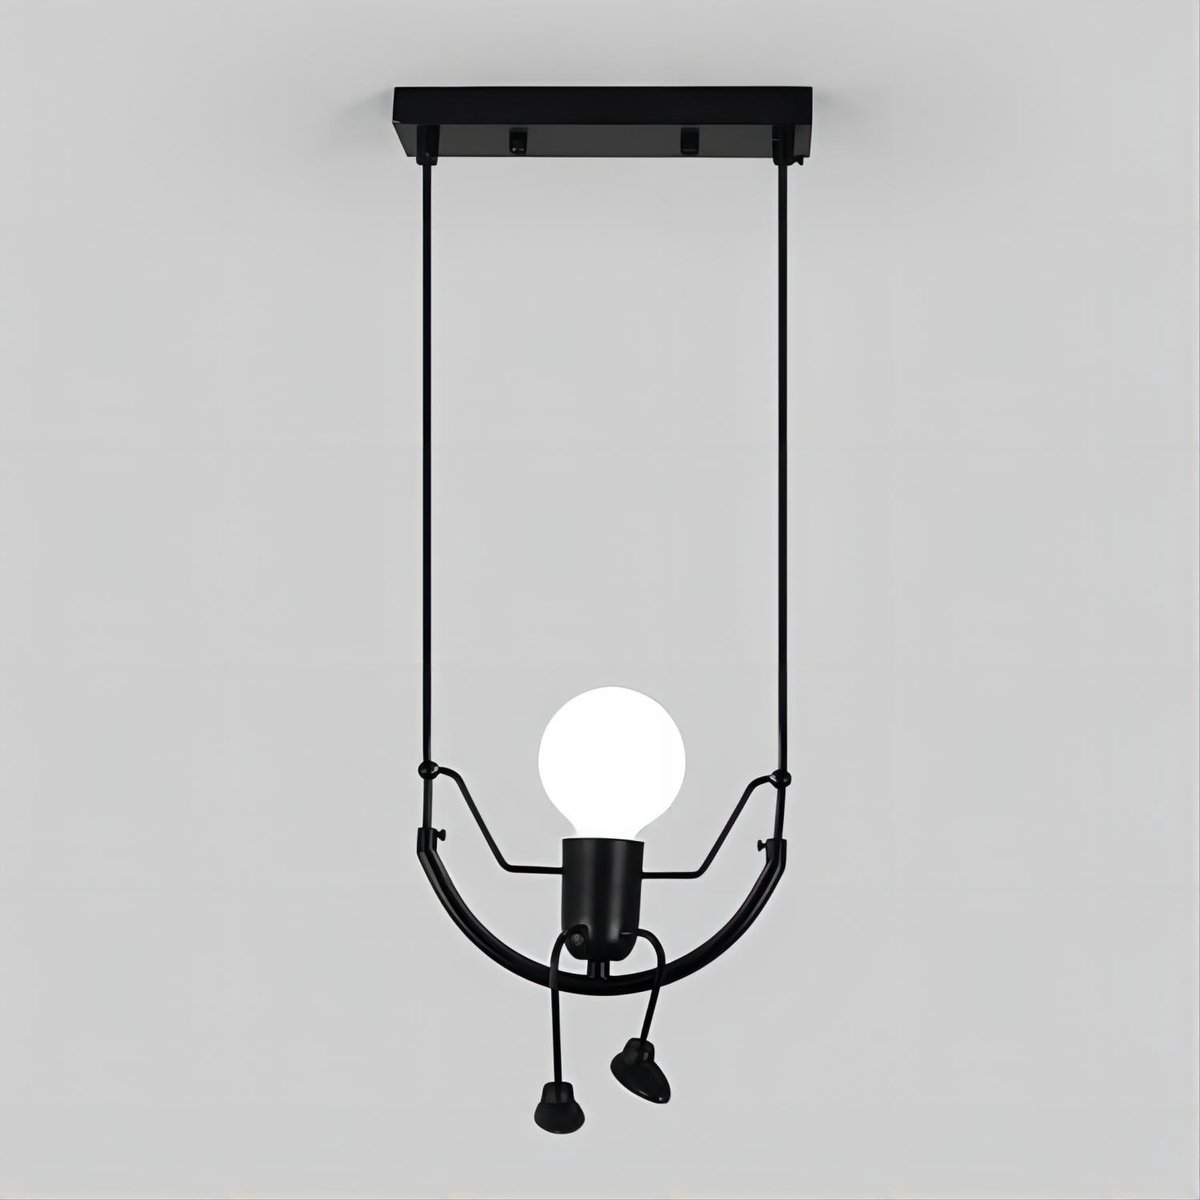 Goeco Hanglamp - 100cm - Medium - E27- Black Humanoid Hanglamp - Max 60W - Lamp niet inbegrepen